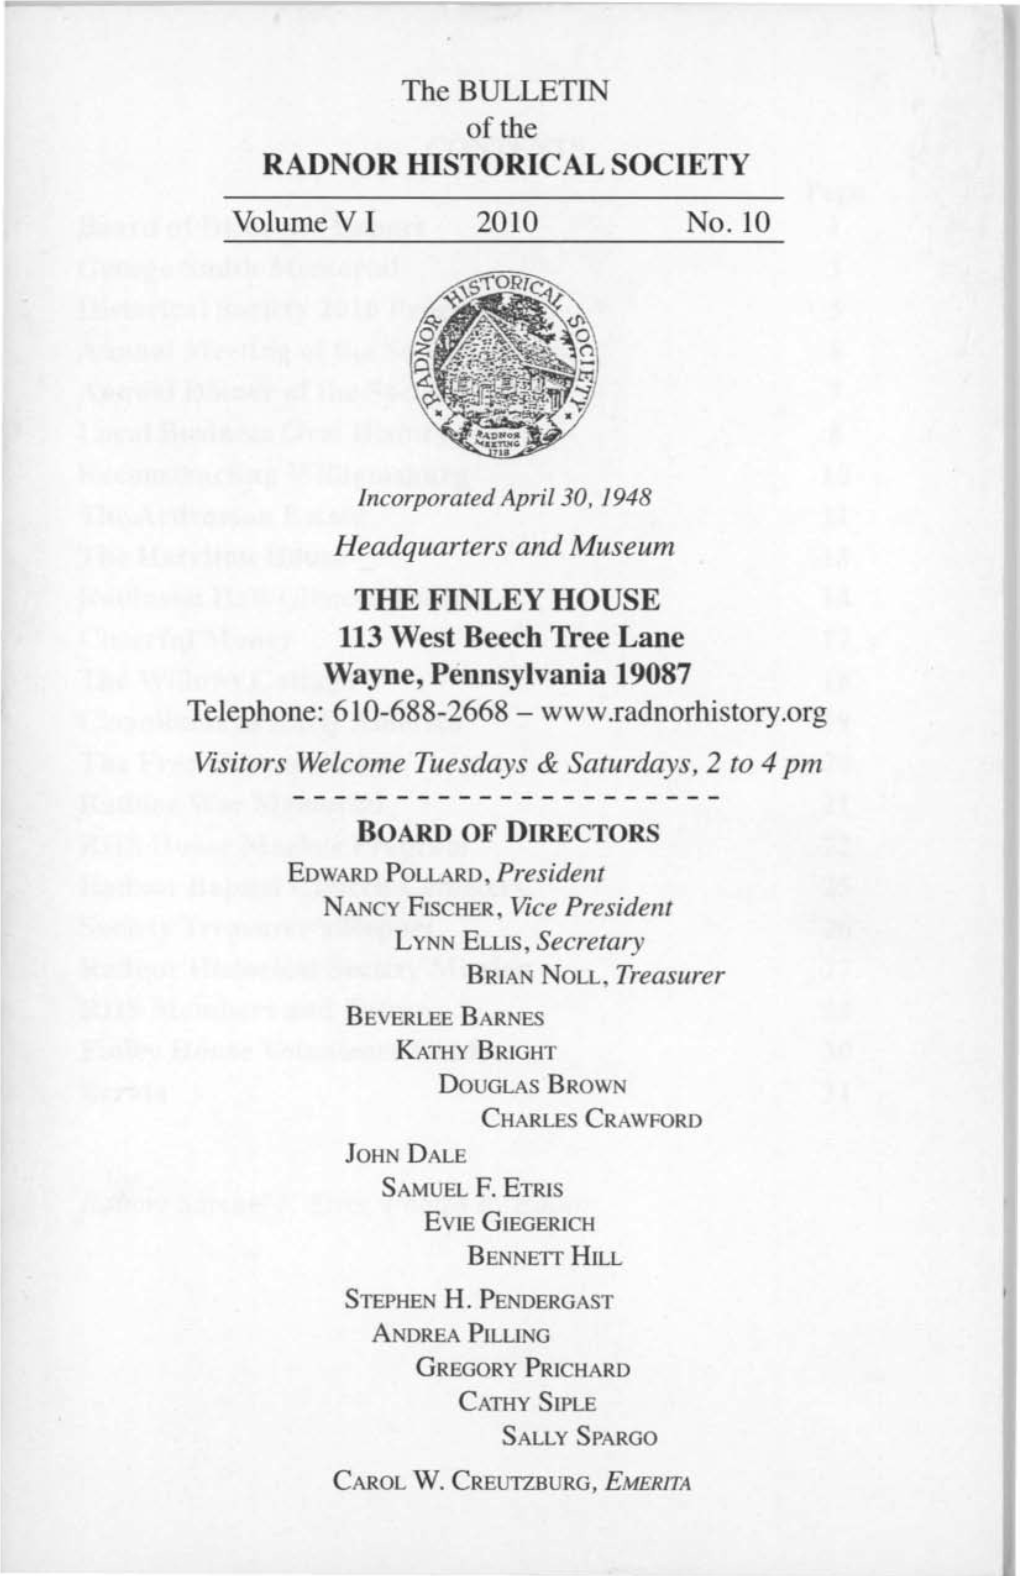 The BULLETIN of the RADNOR HISTORICAL SOCIETY Volume VI 2010 No